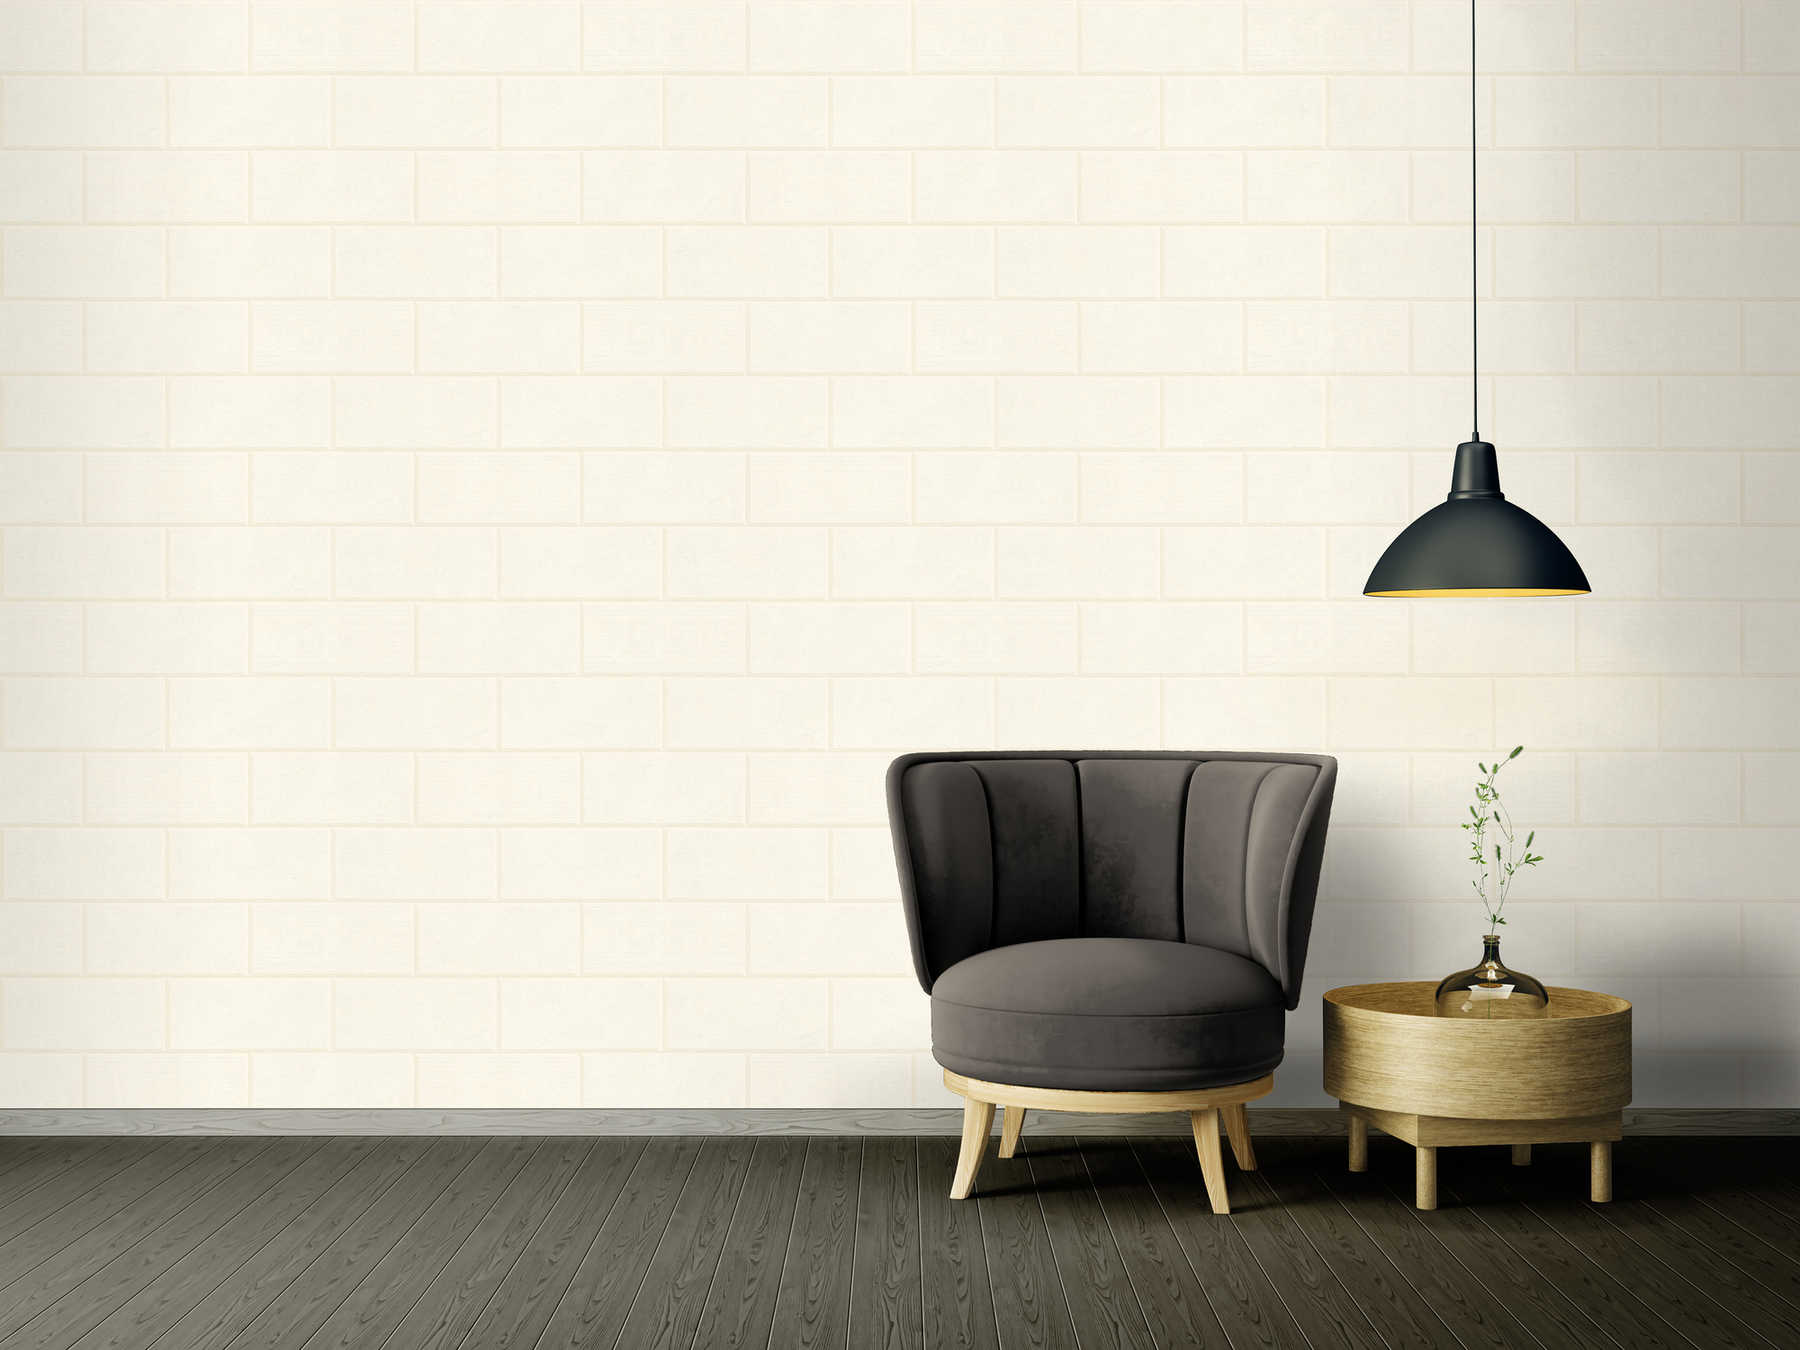             VERSACE wallpaper stone look design & meander - cream
        